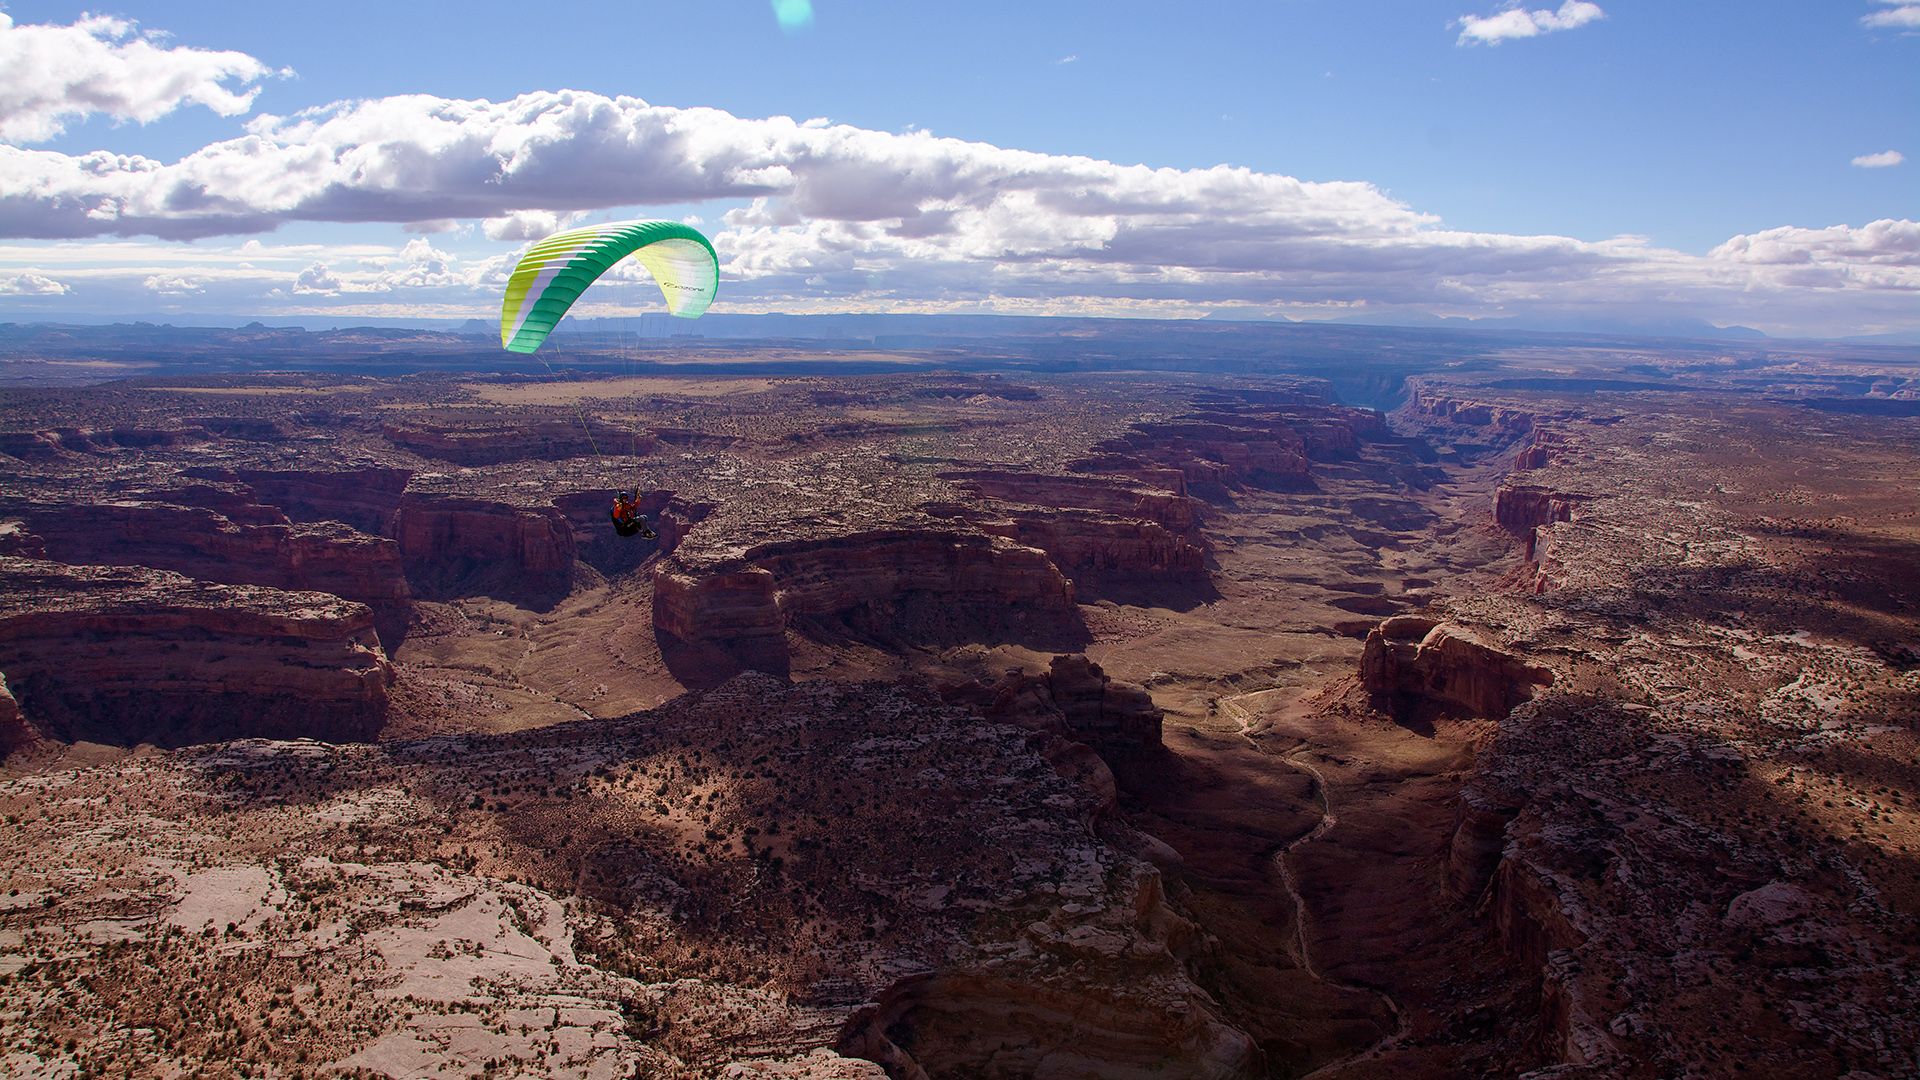 Mojo 5 | Ozone Paragliders